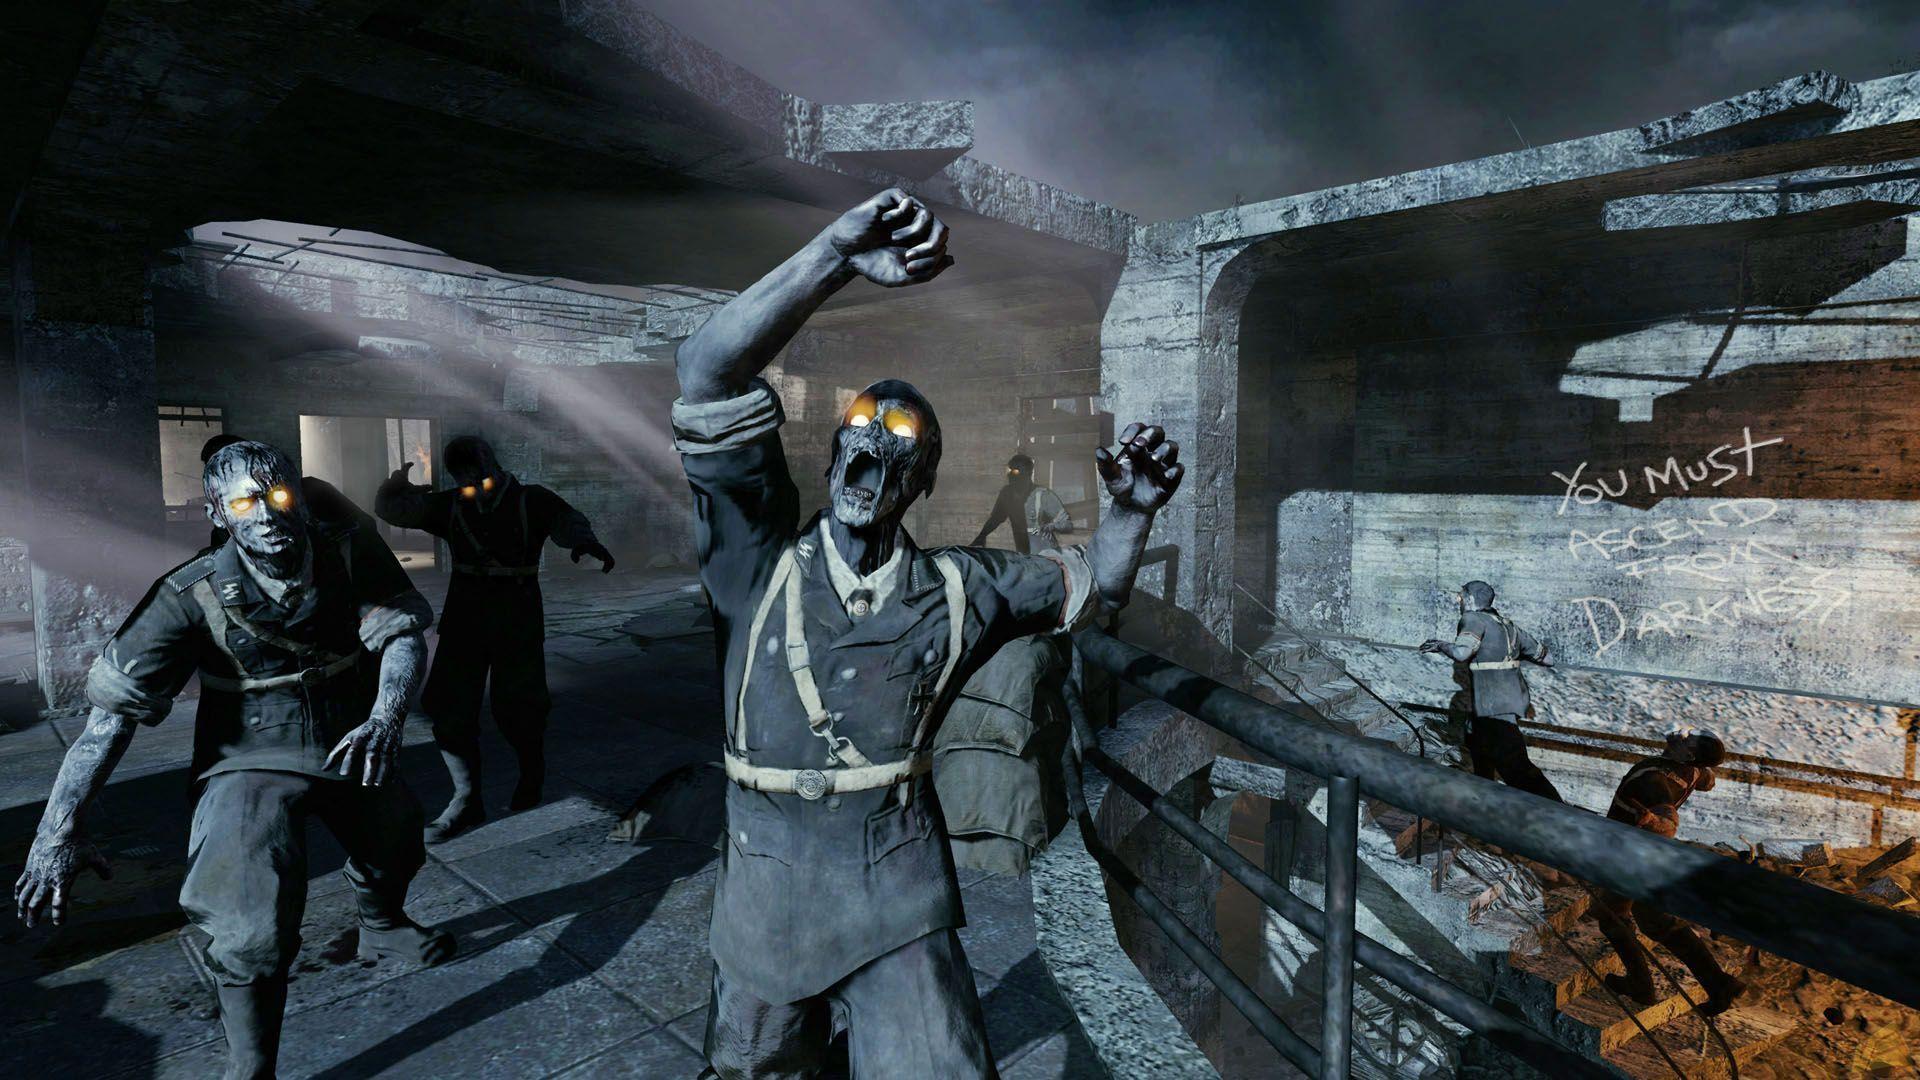 image For > Black Ops Zombies Rezurrection Wallpaper